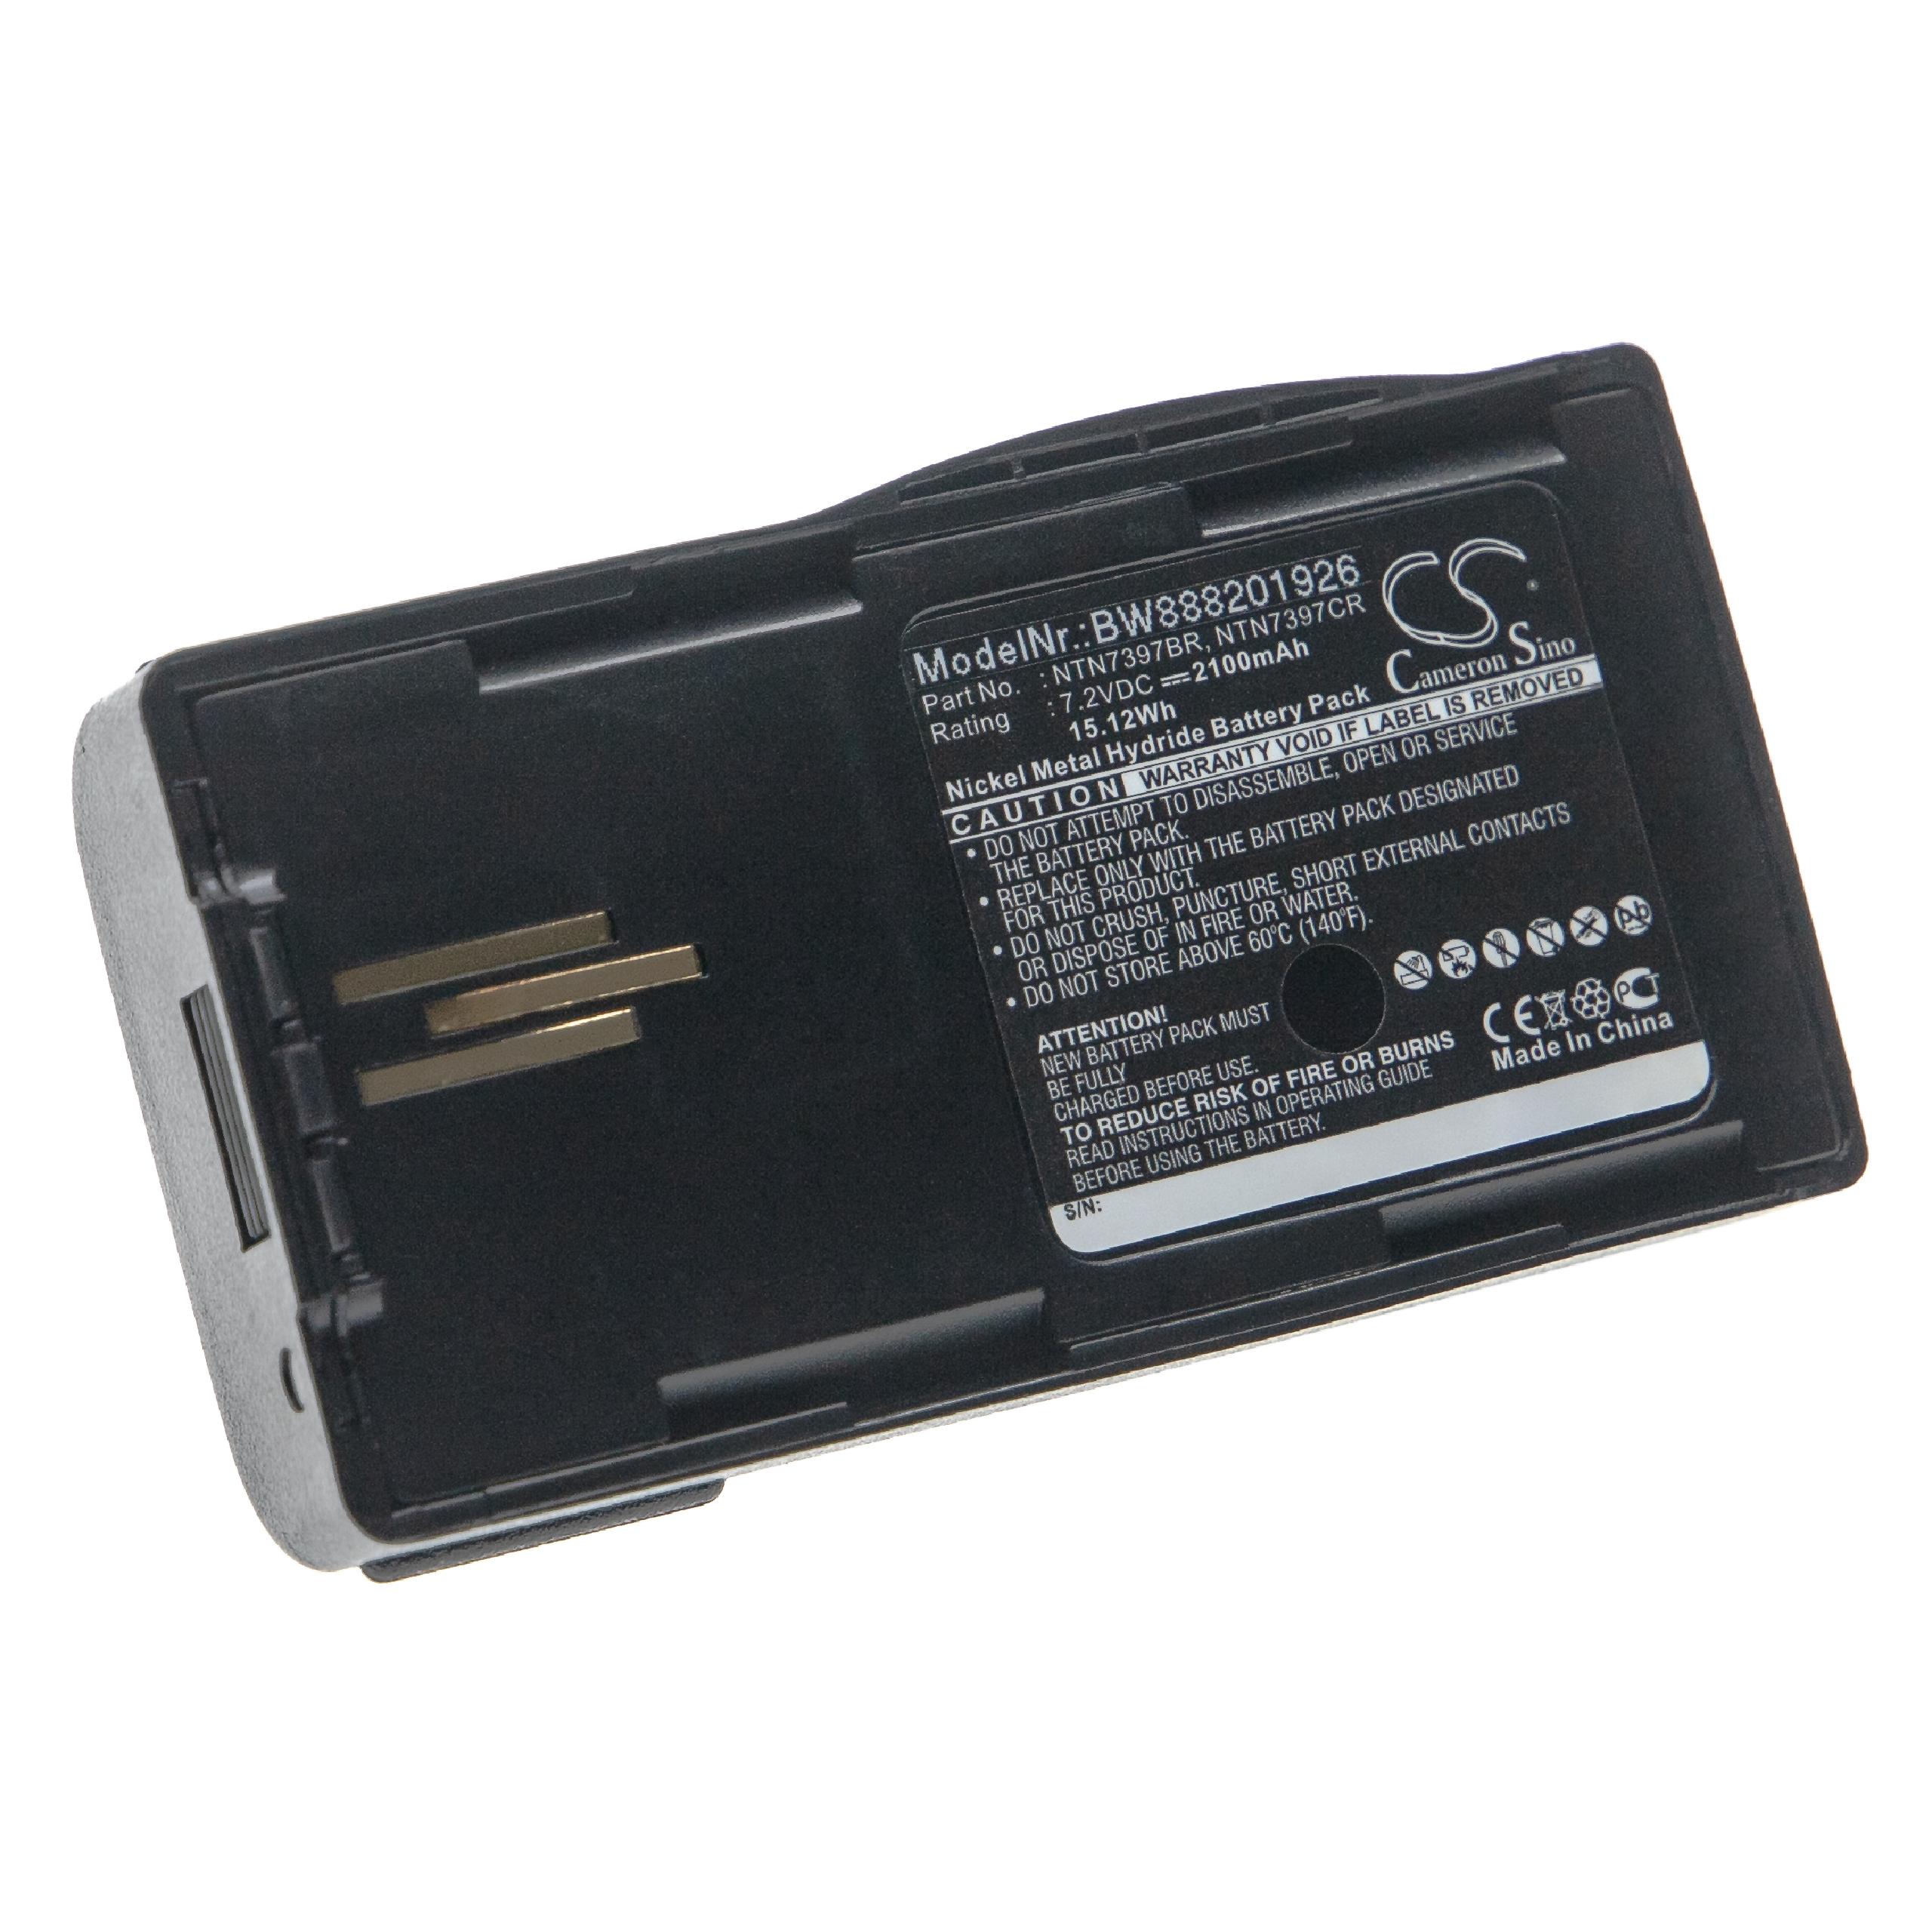 Batterie remplace Motorola NTN7394, NTN7394AR, NTN7394A pour radio talkie-walkie - 2100mAh 7,2V NiMH